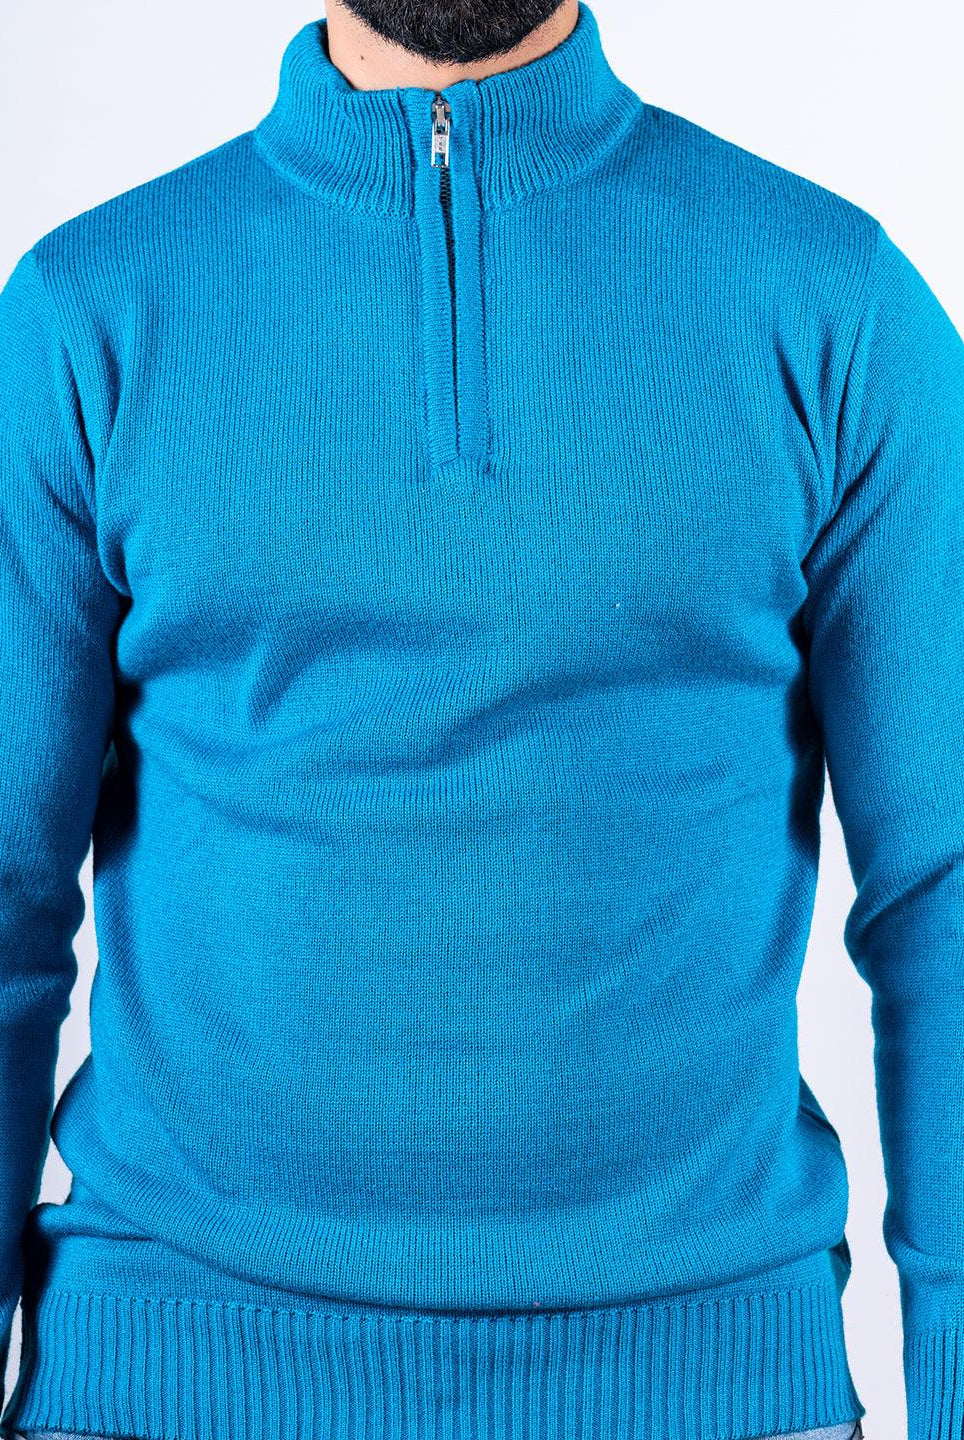 Teal Blue Color Classic Zipper Men's Sweater - Tistabene